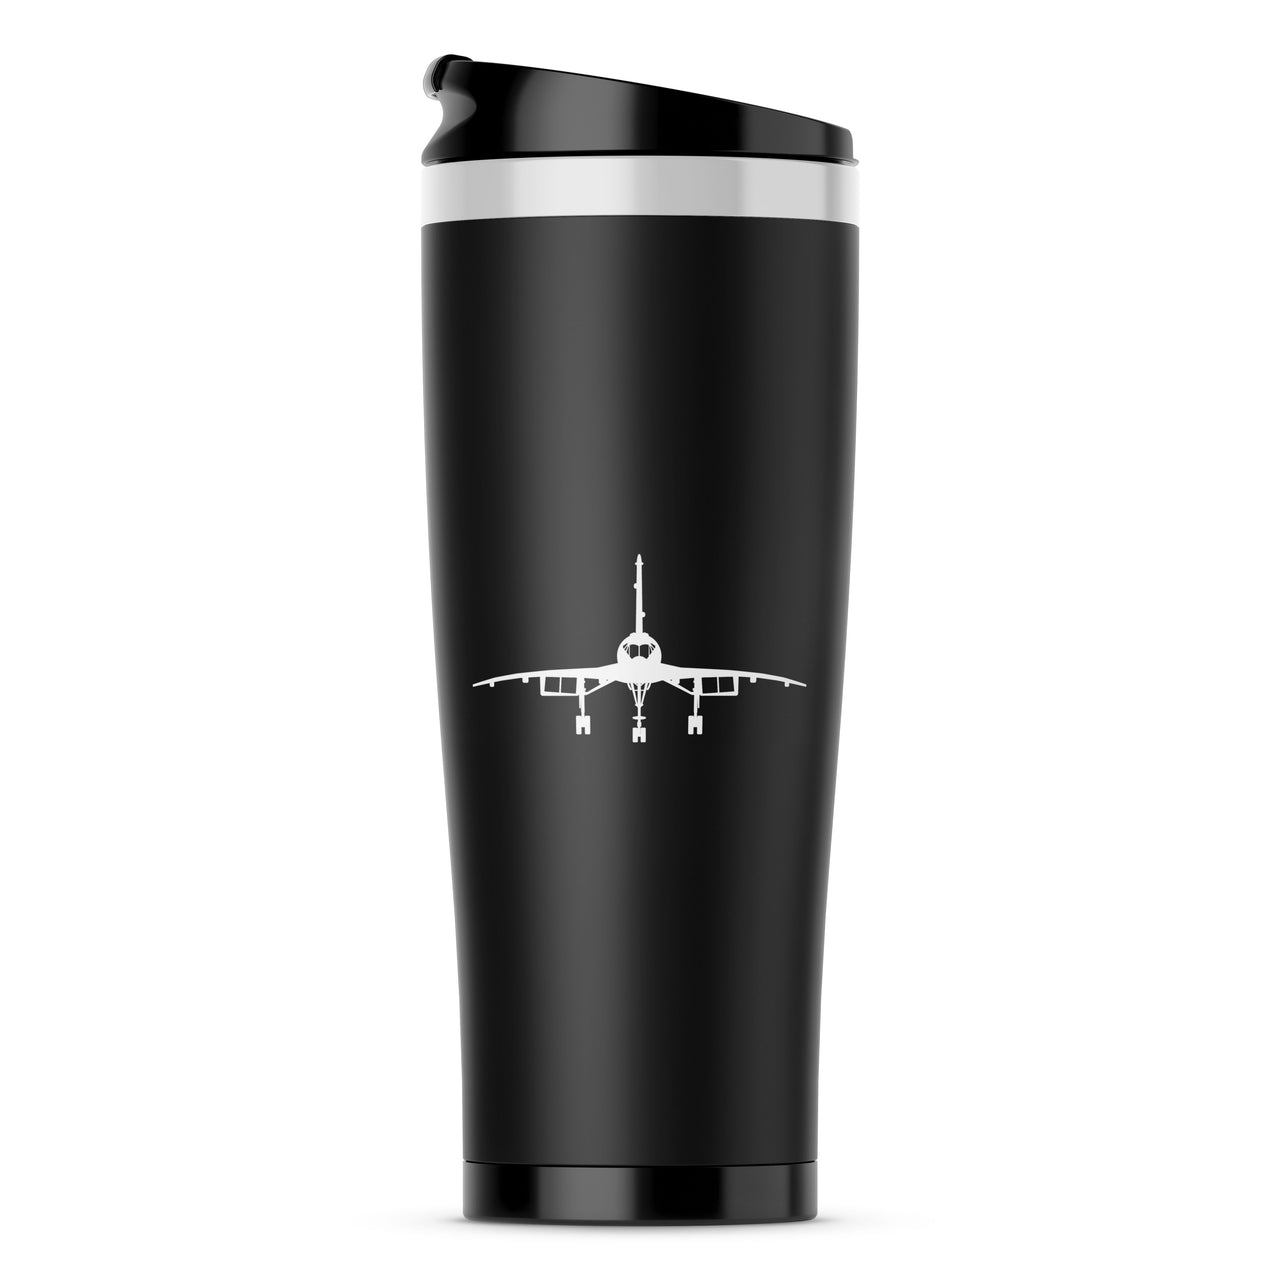 Concorde Silhouette Designed Travel Mugs